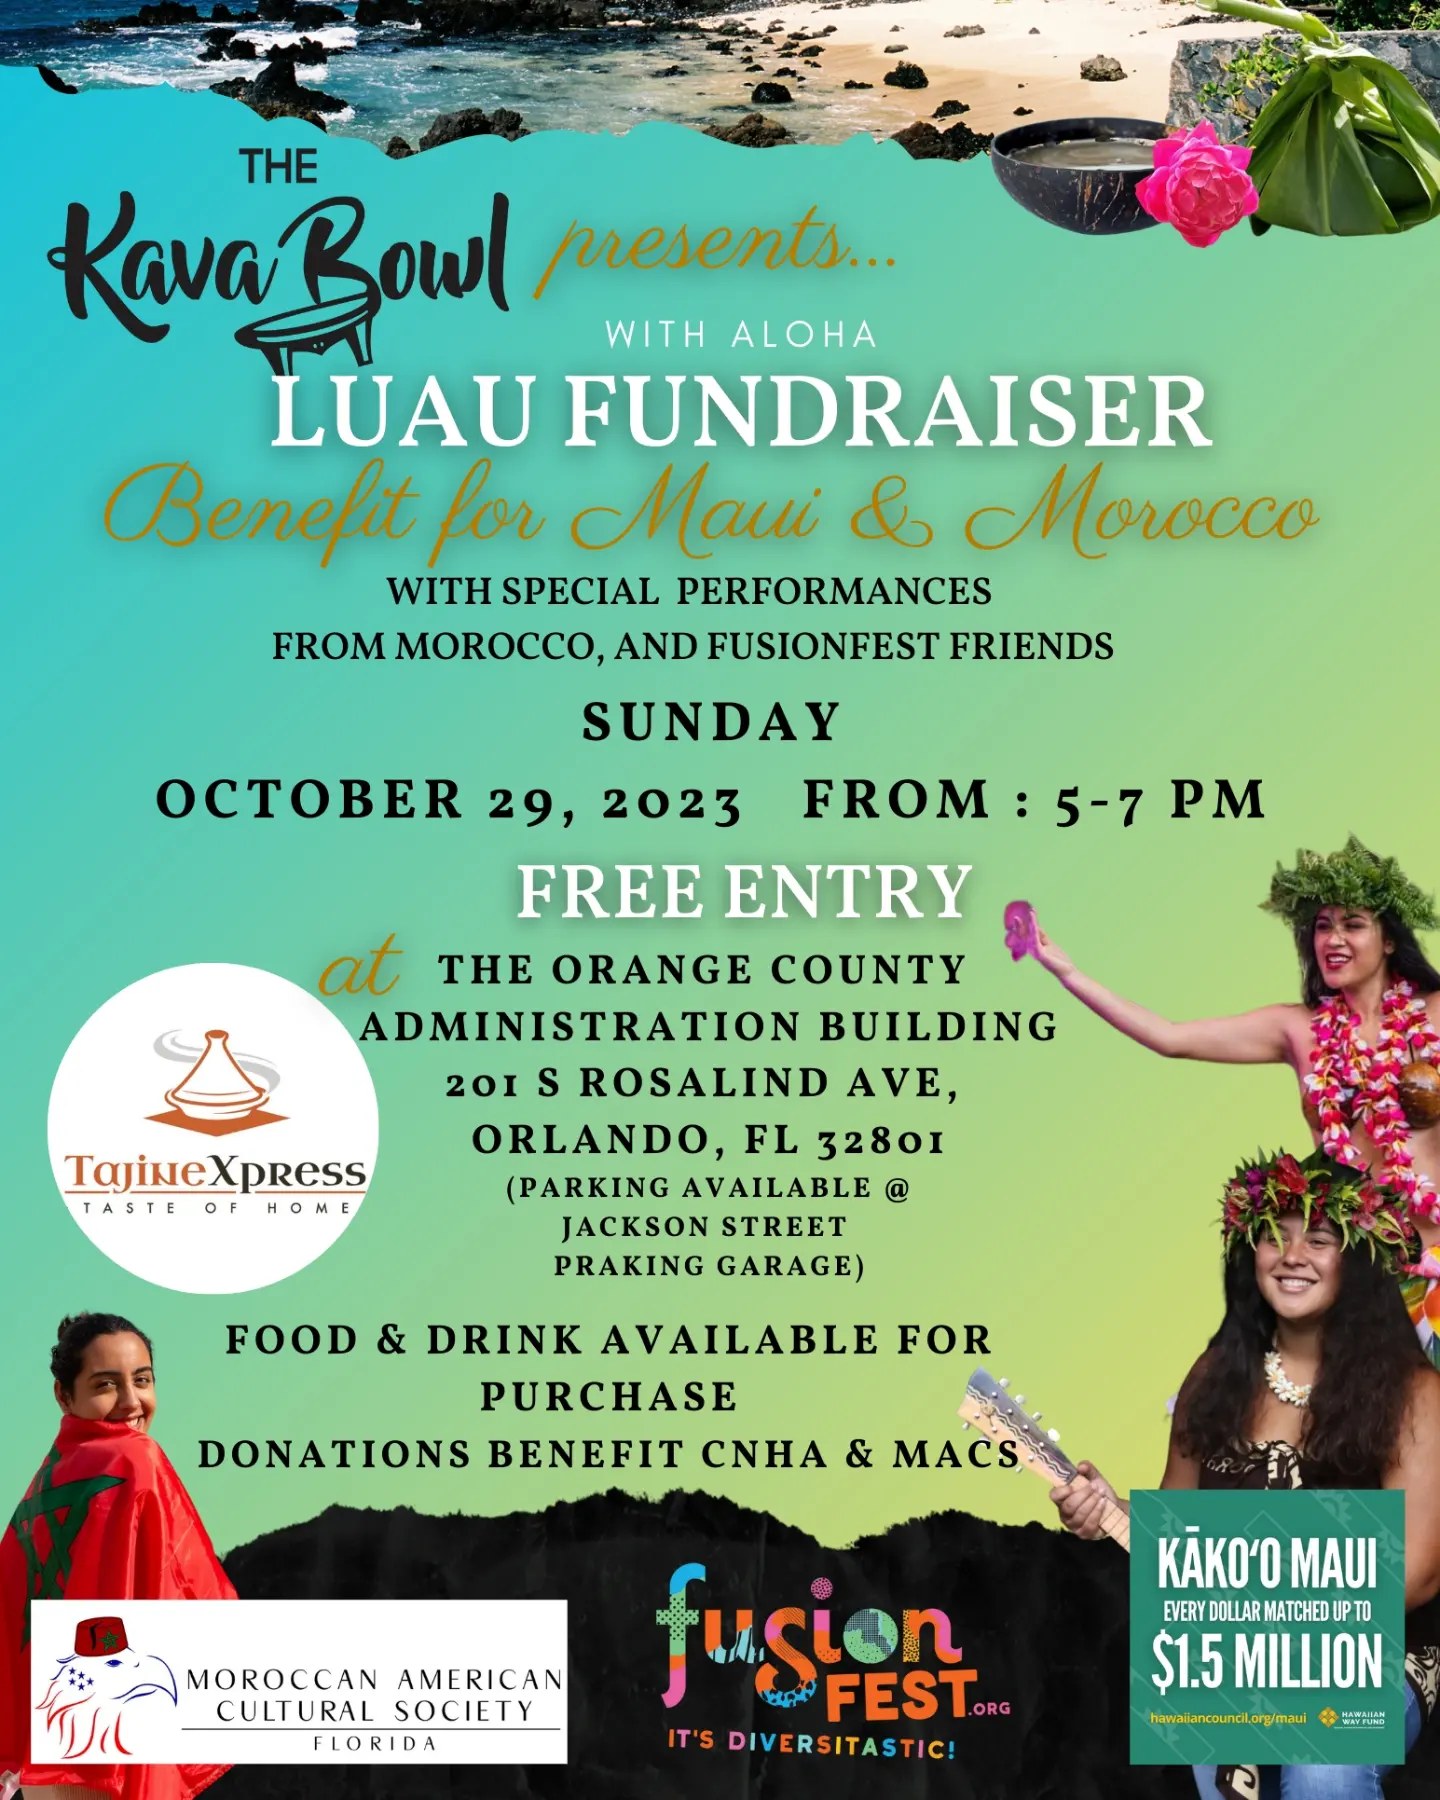 LUAU Fundraiser Benefit for Maui and Morocco